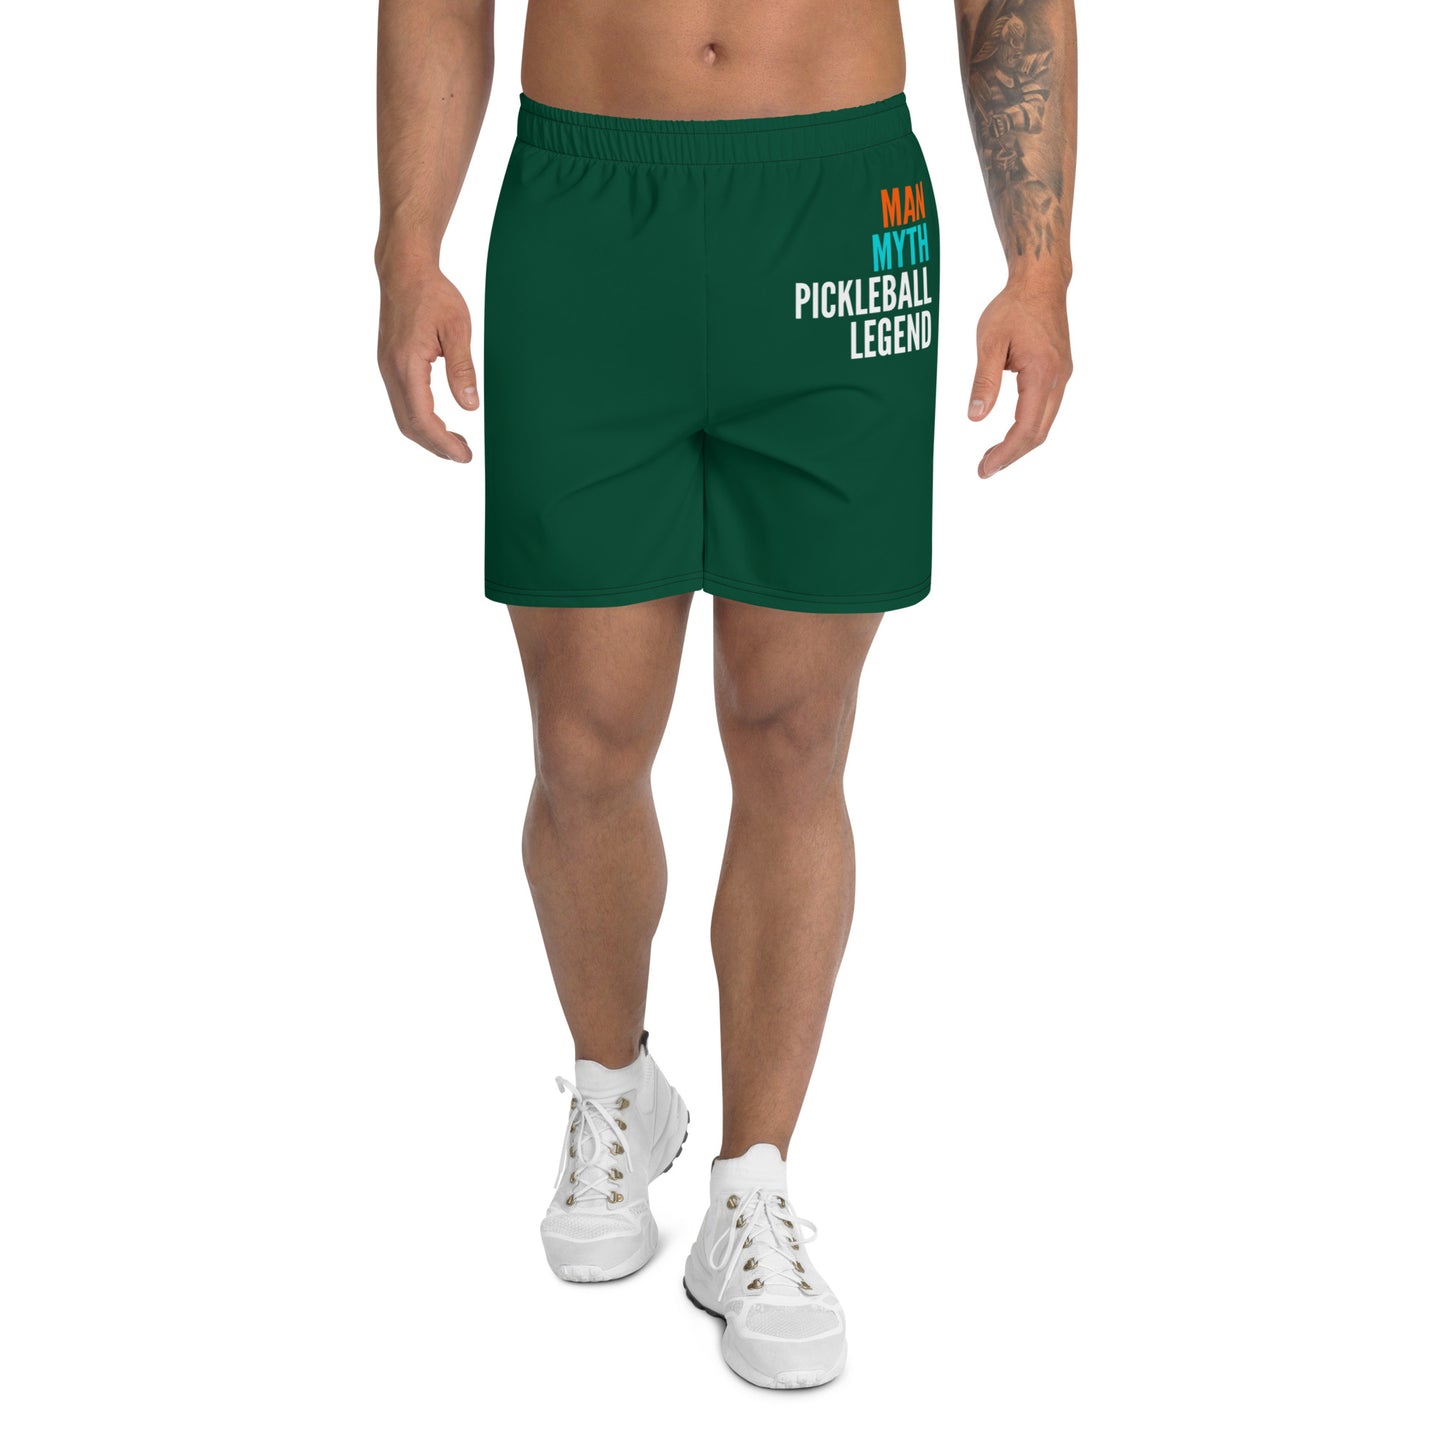 Pickleball Legend Shorts